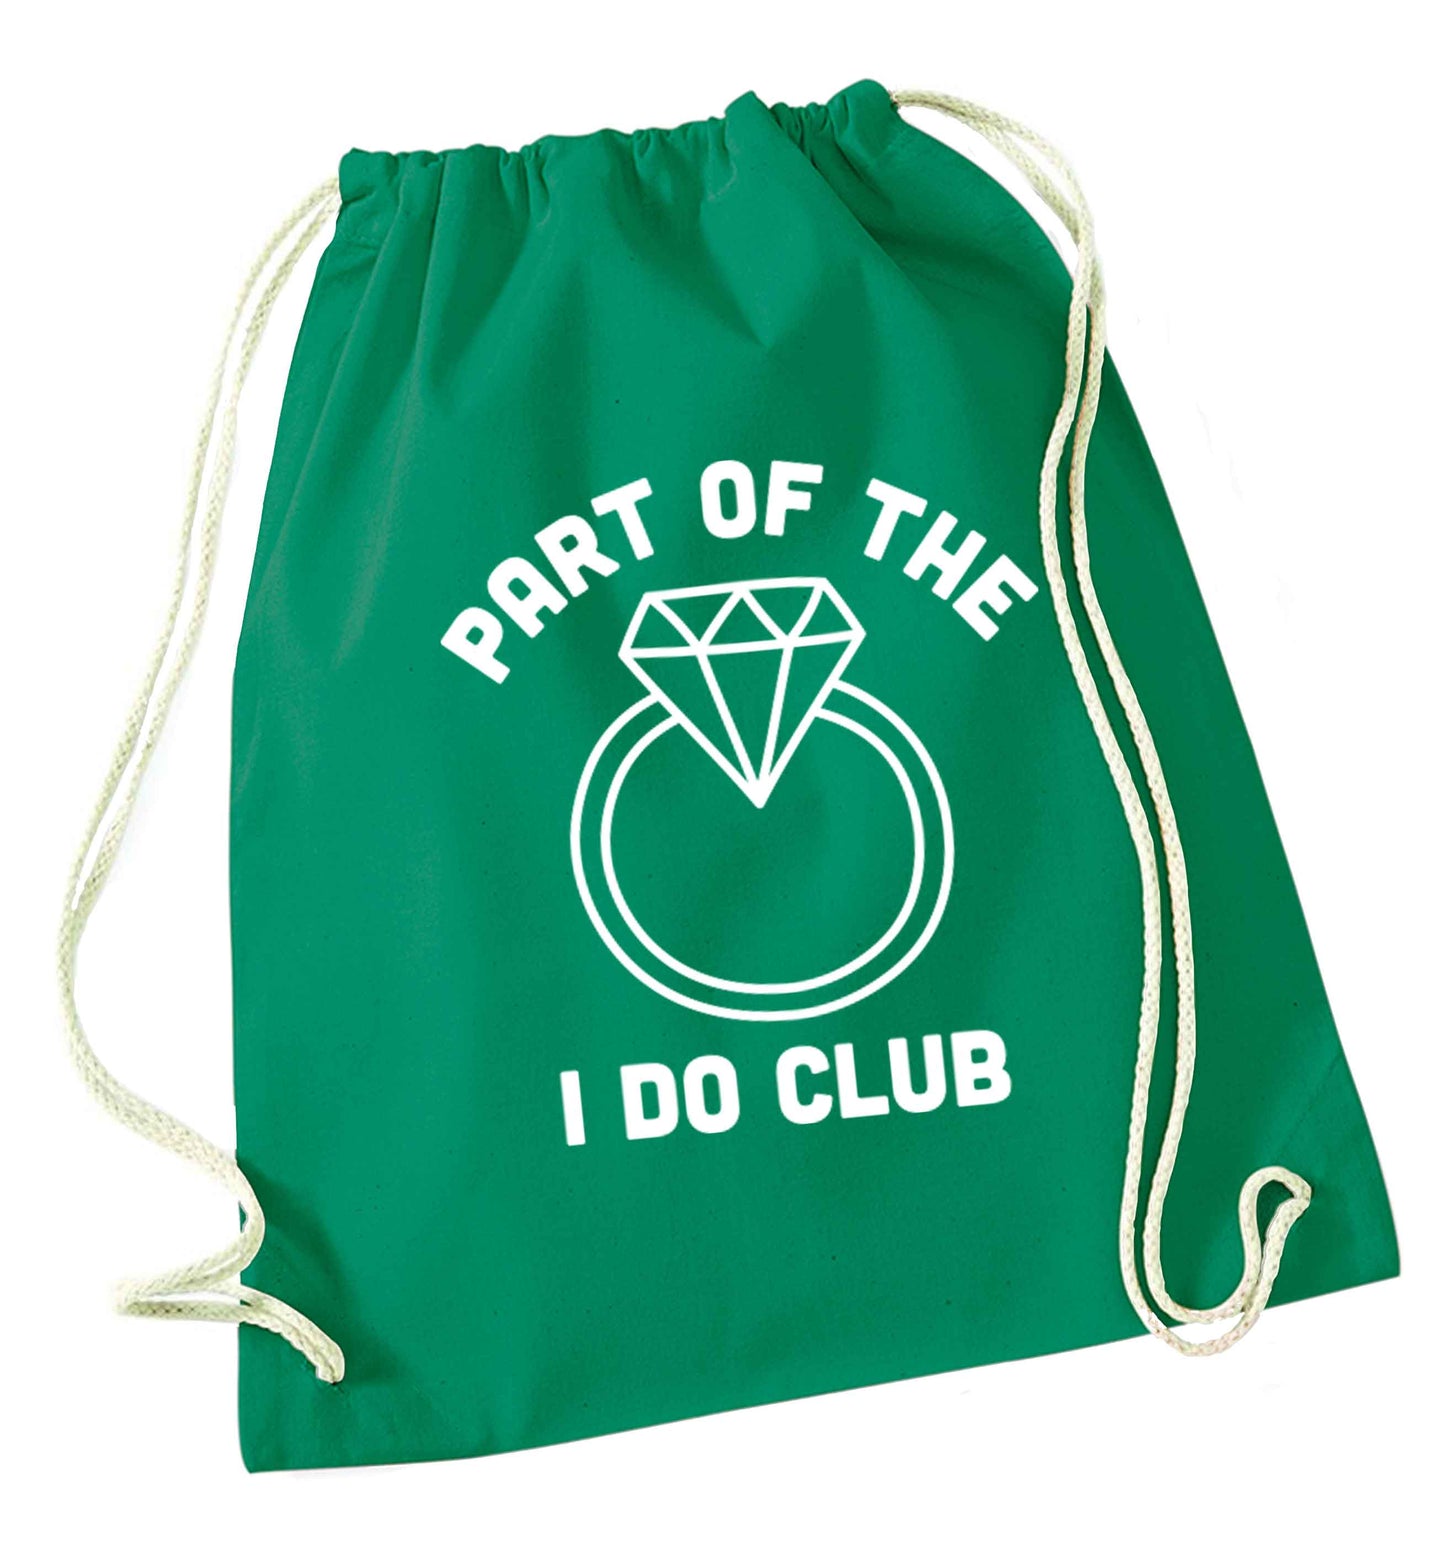 Part of the I do club green drawstring bag